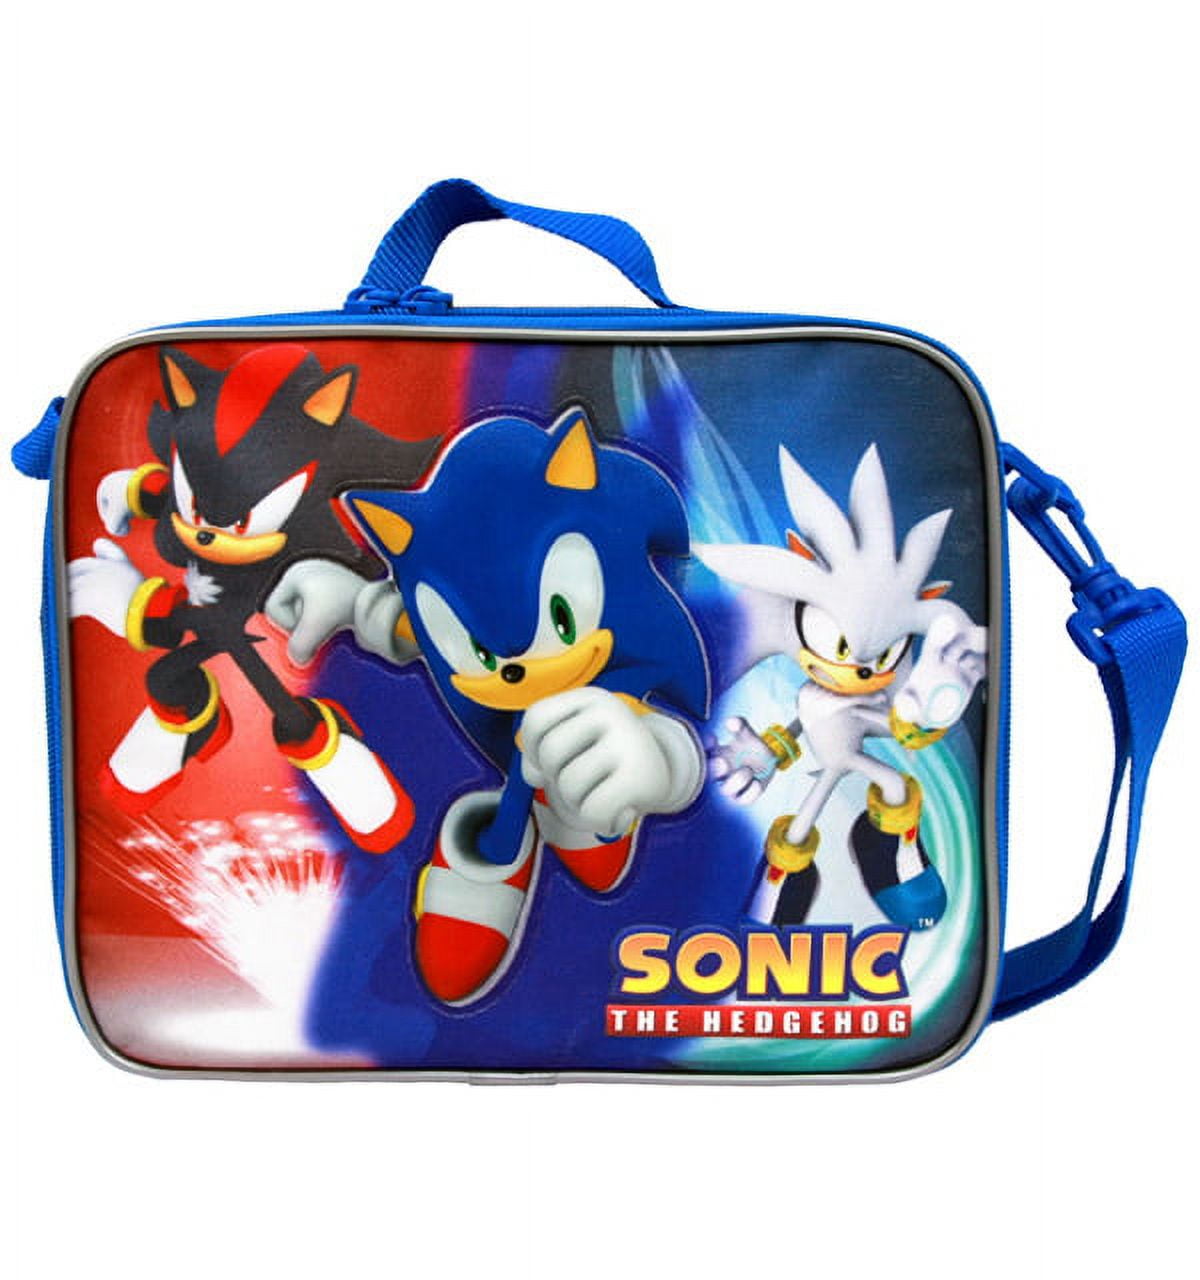 Sonic the Hedgehog Team Lunch Bag #SH43871